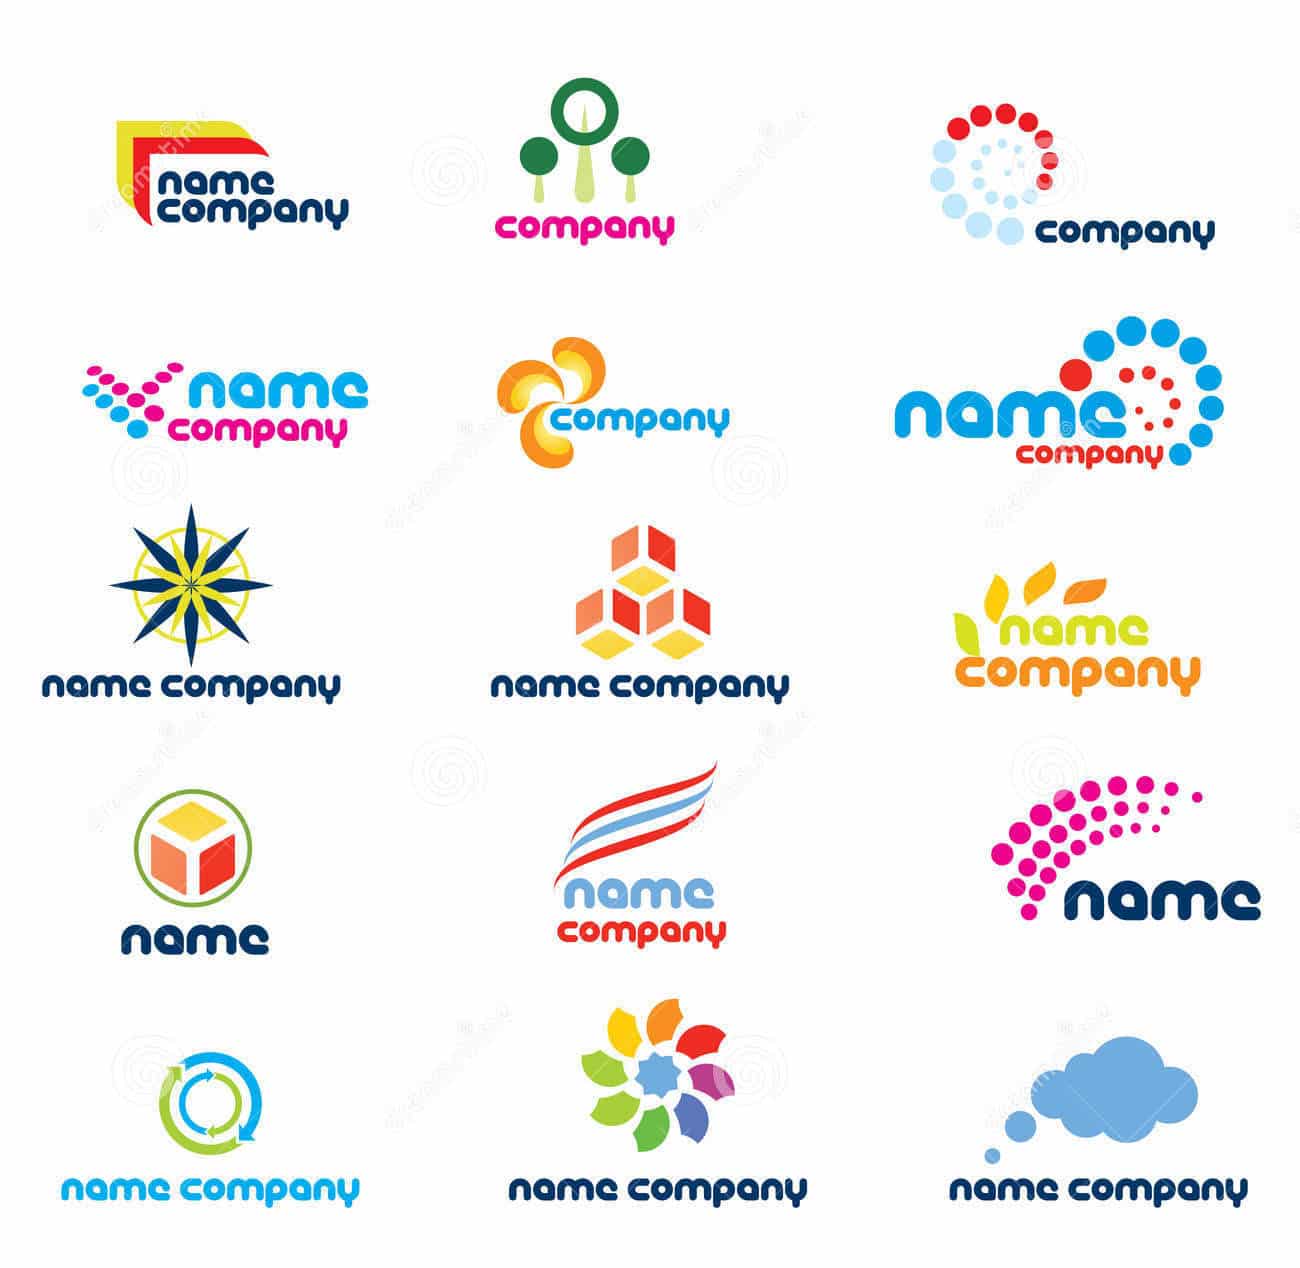 Company logos with names